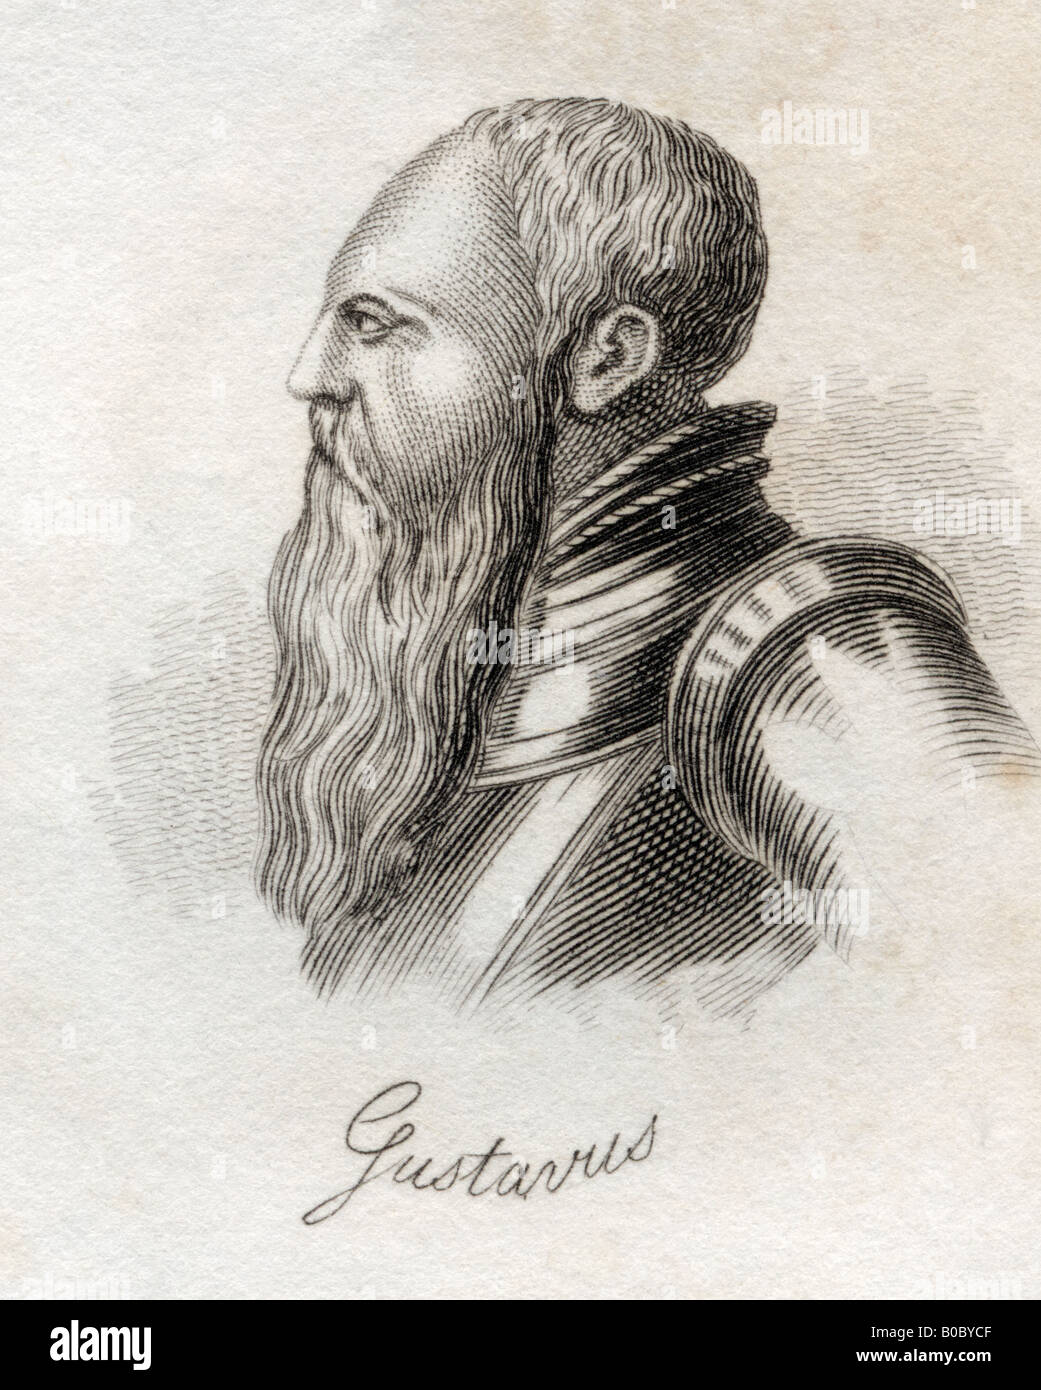 Gustav i Vasa, nom original Gustav Eriksson Vasa, c.1496 -1560. Roi de Suède. Banque D'Images